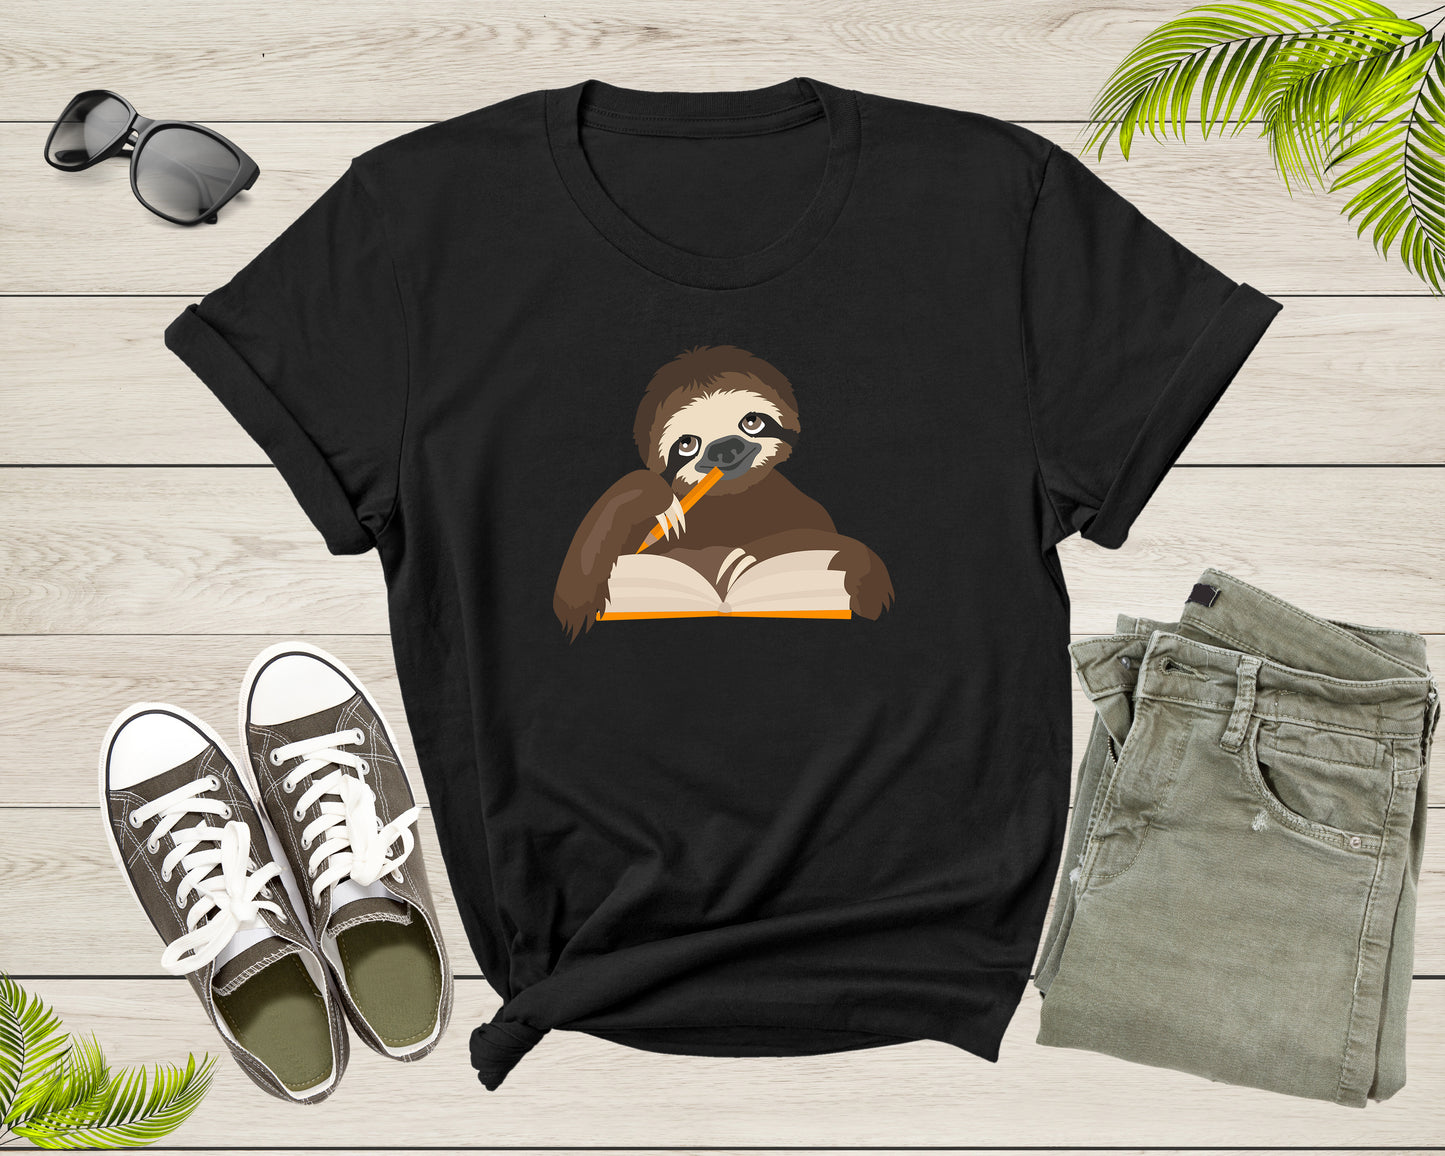 Happy Student Sloth Reading Writing Book Study Pencil Desk T-Shirt Reading Sloth Lover Gift T Shirt for Men Women Kids Boys Girls Tshirt